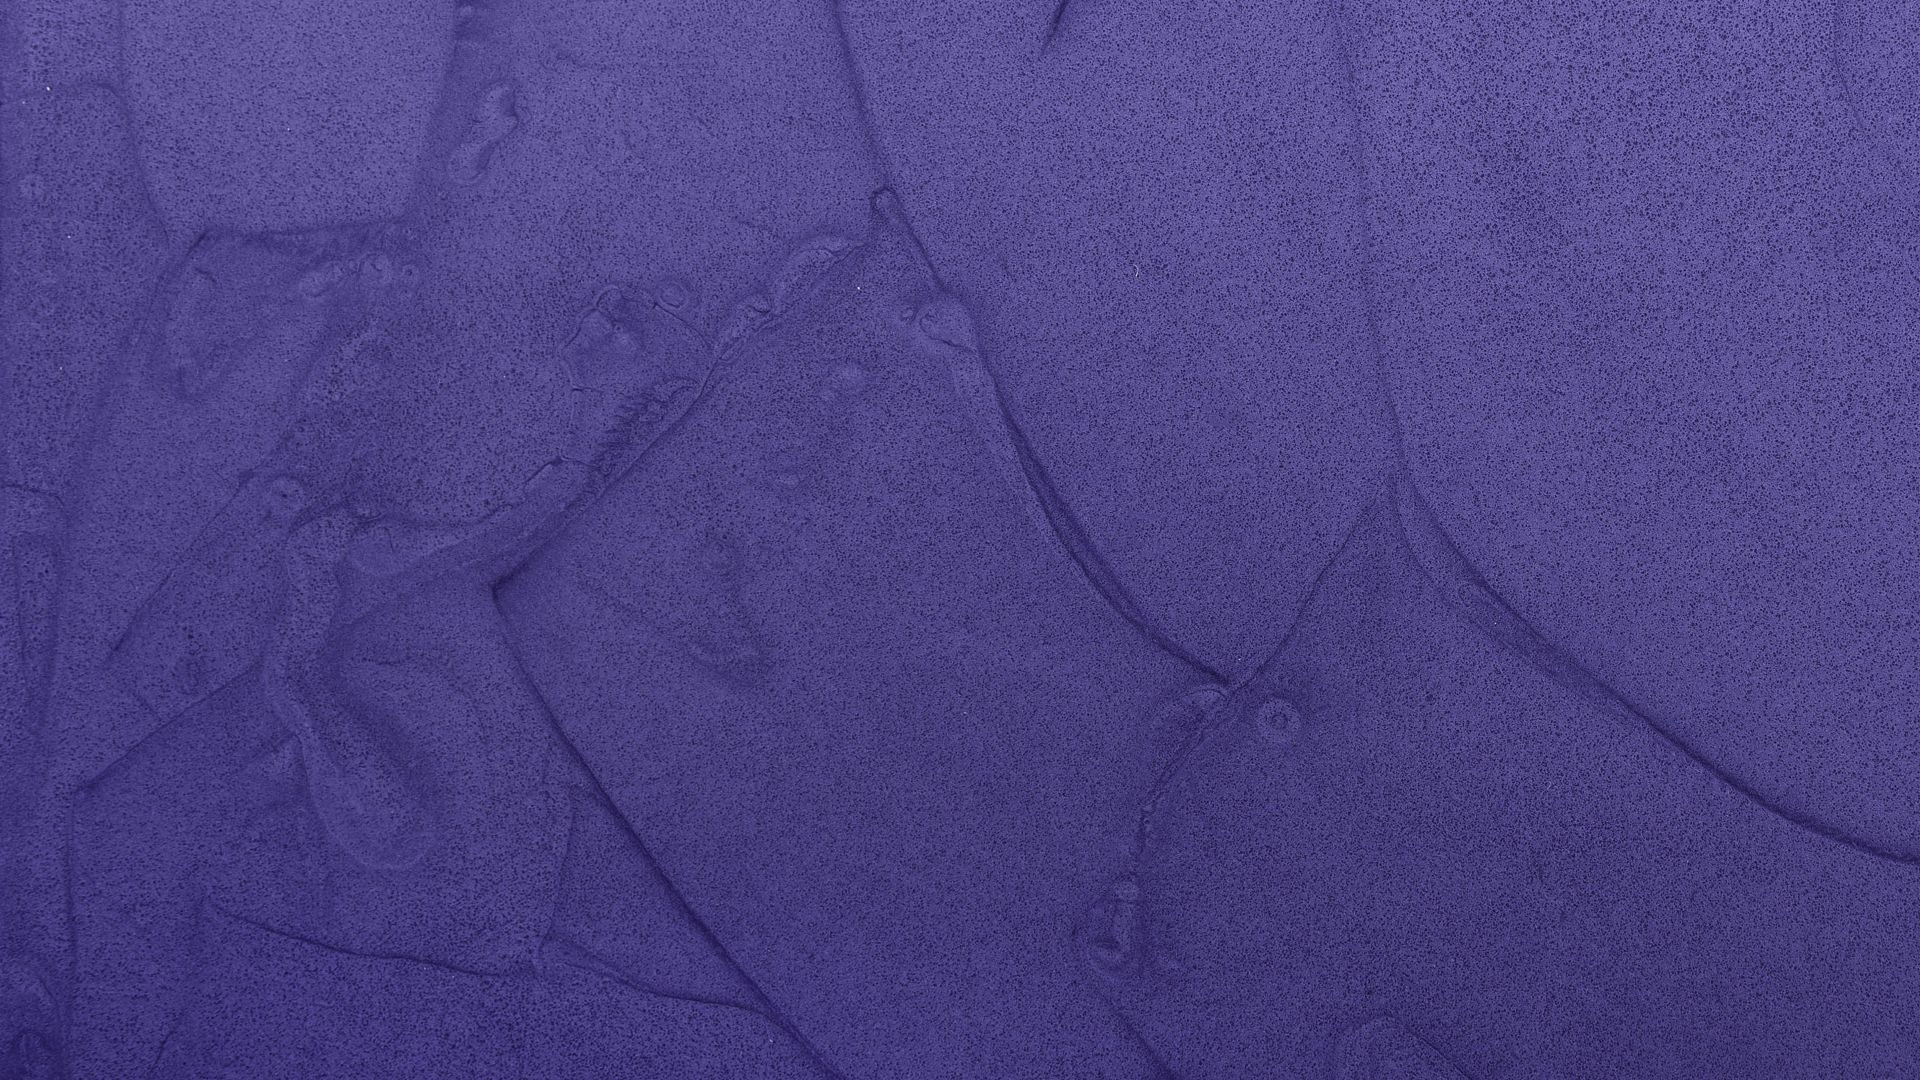 Color sample of decorative floor in lavendar